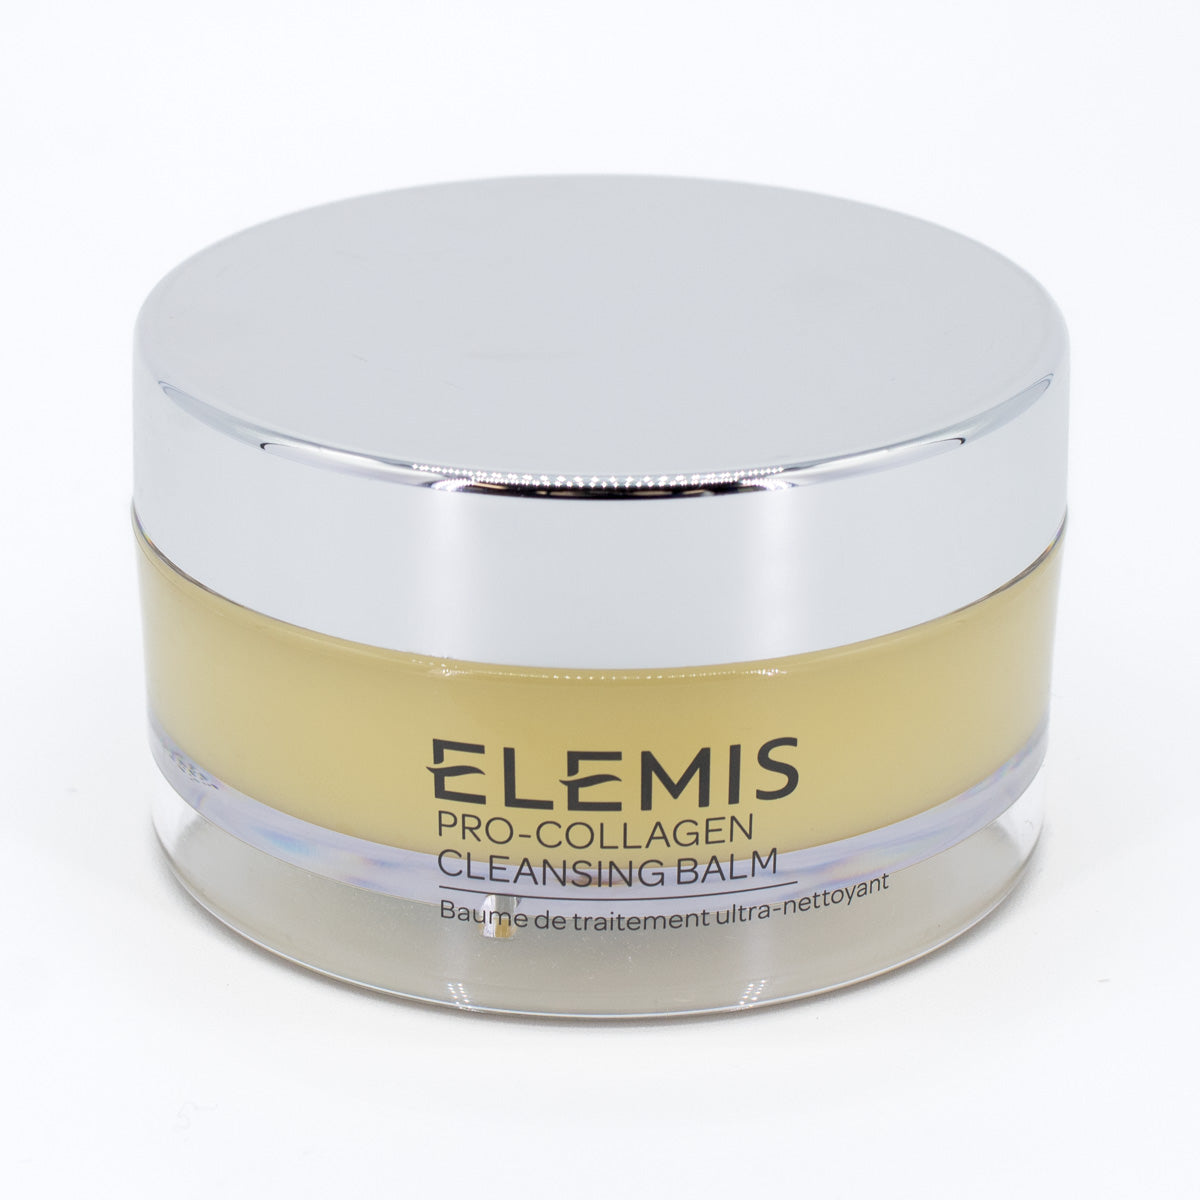 ELEMIS Pro-Collagen Cleansing Balm 1.7oz - New